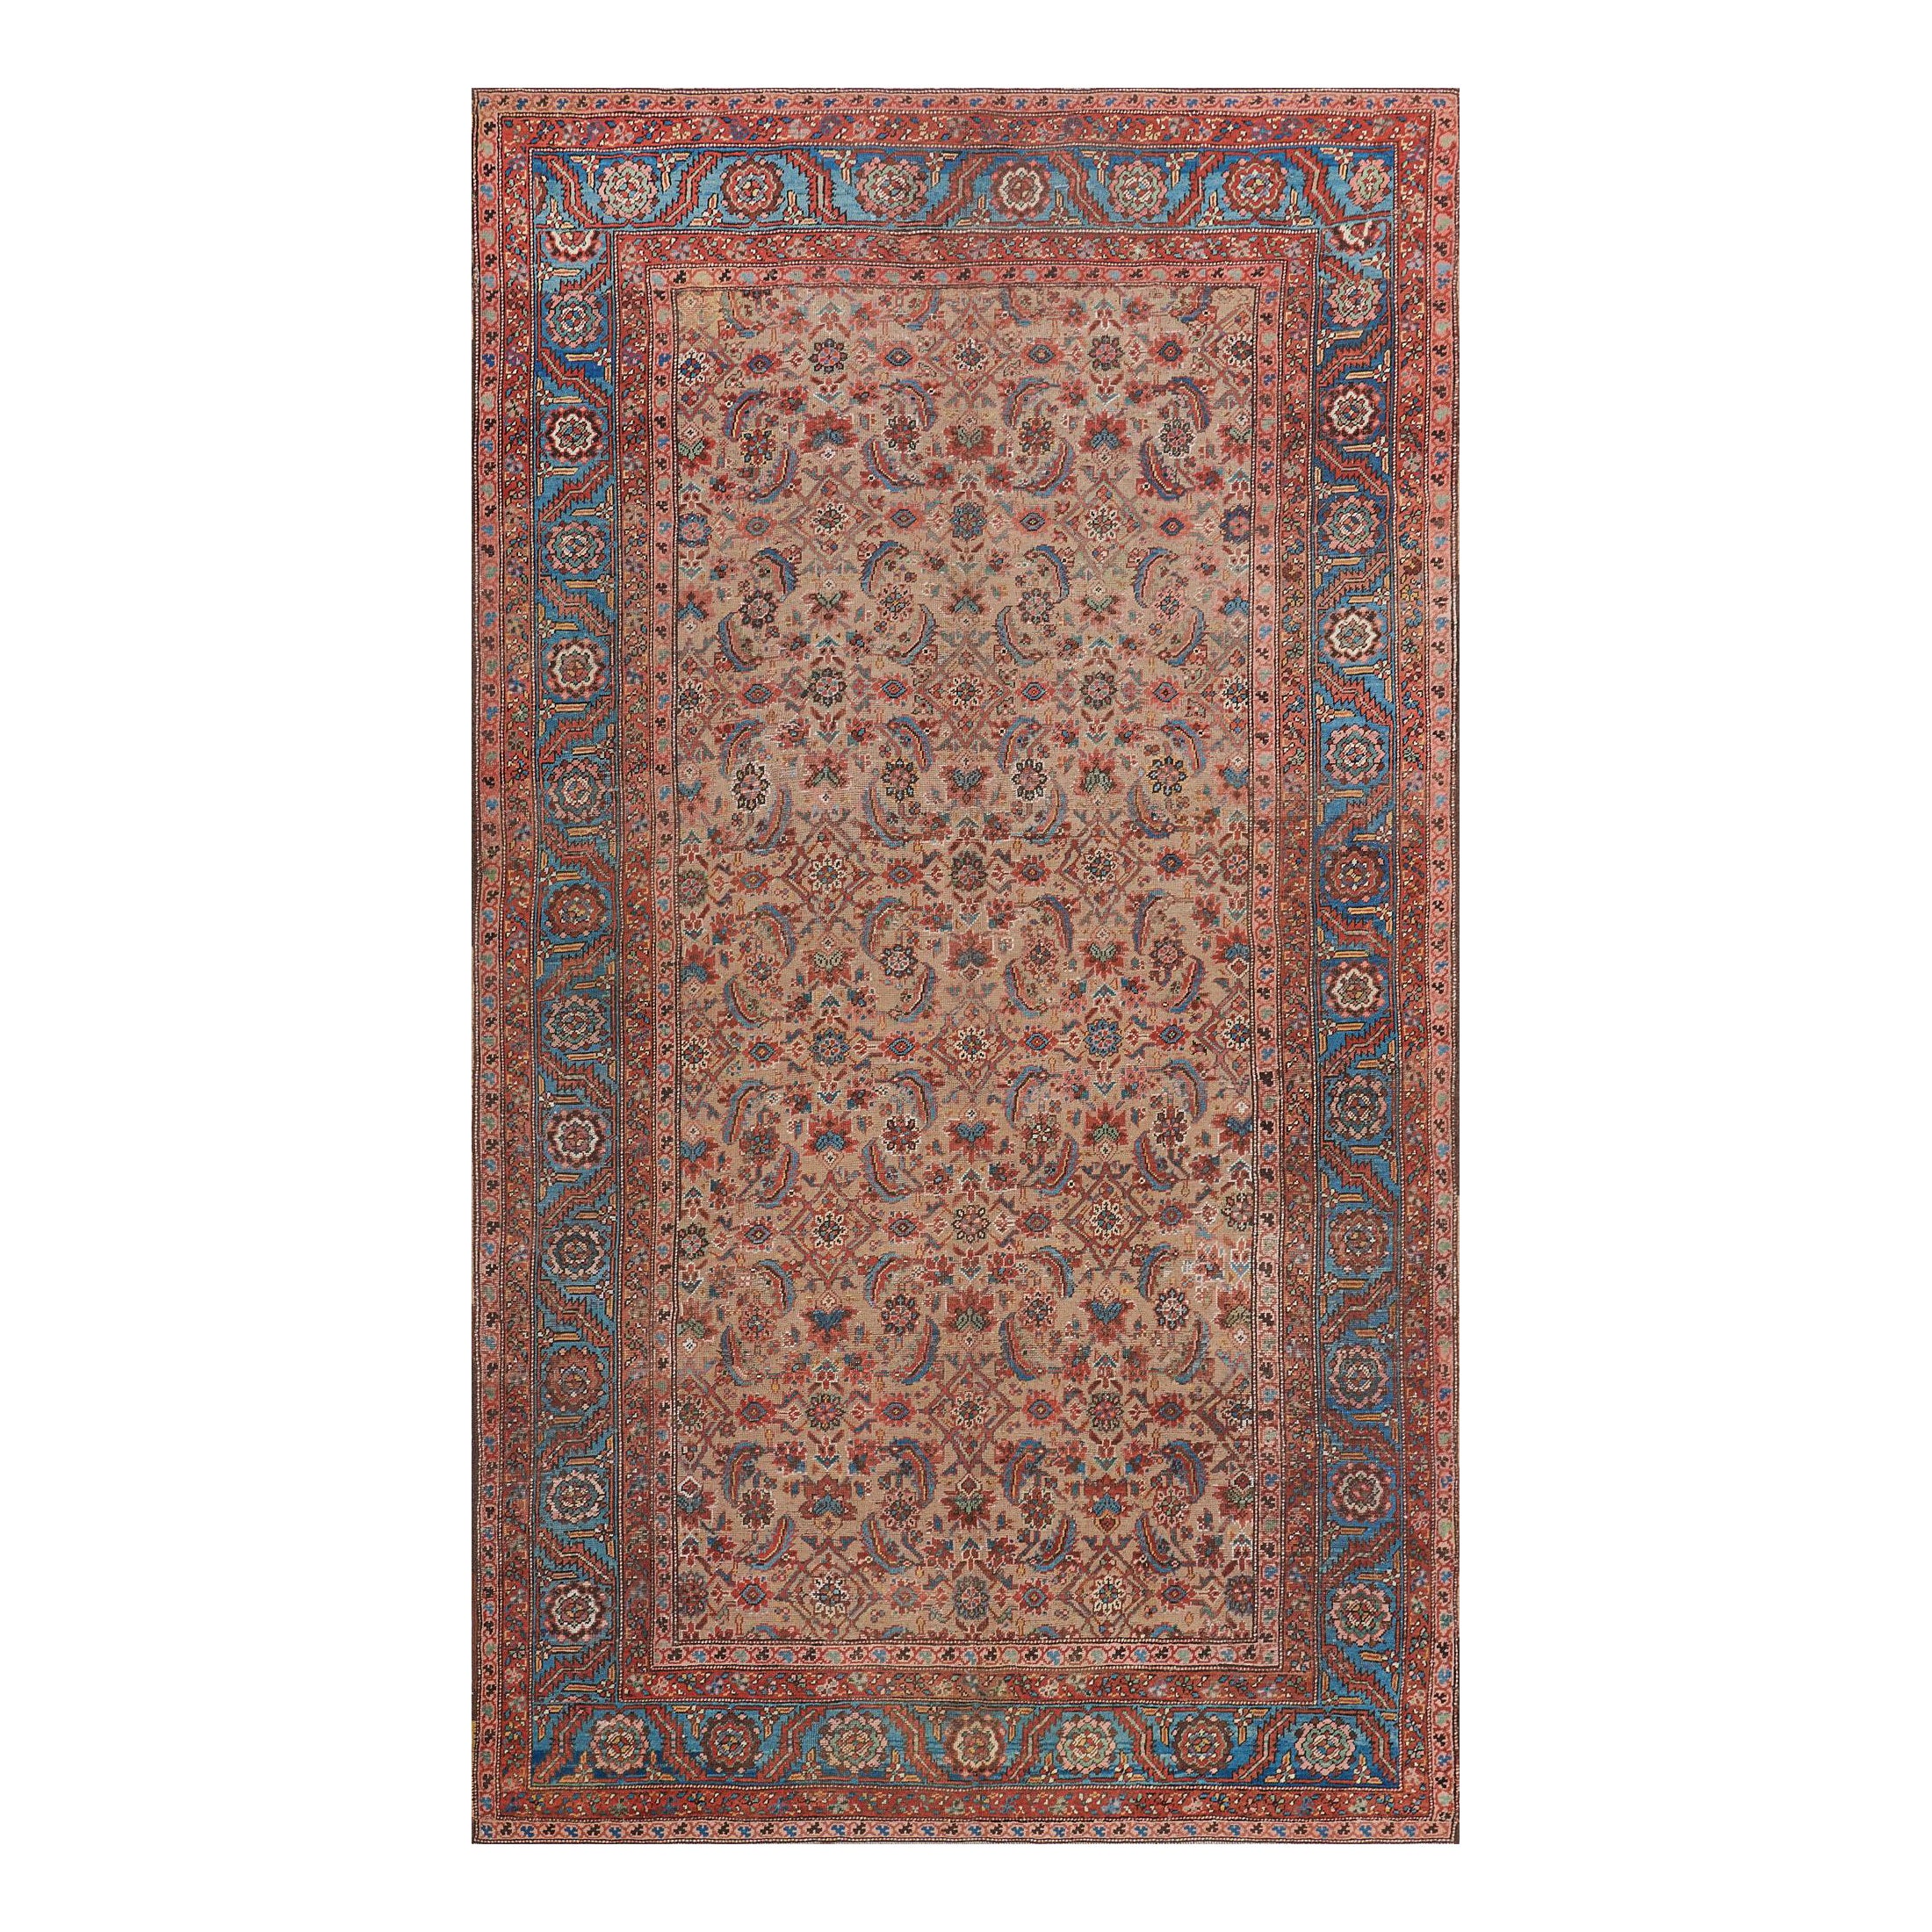 Antique Circa-1880 Herati-pattern Persian Bakshaish Rug